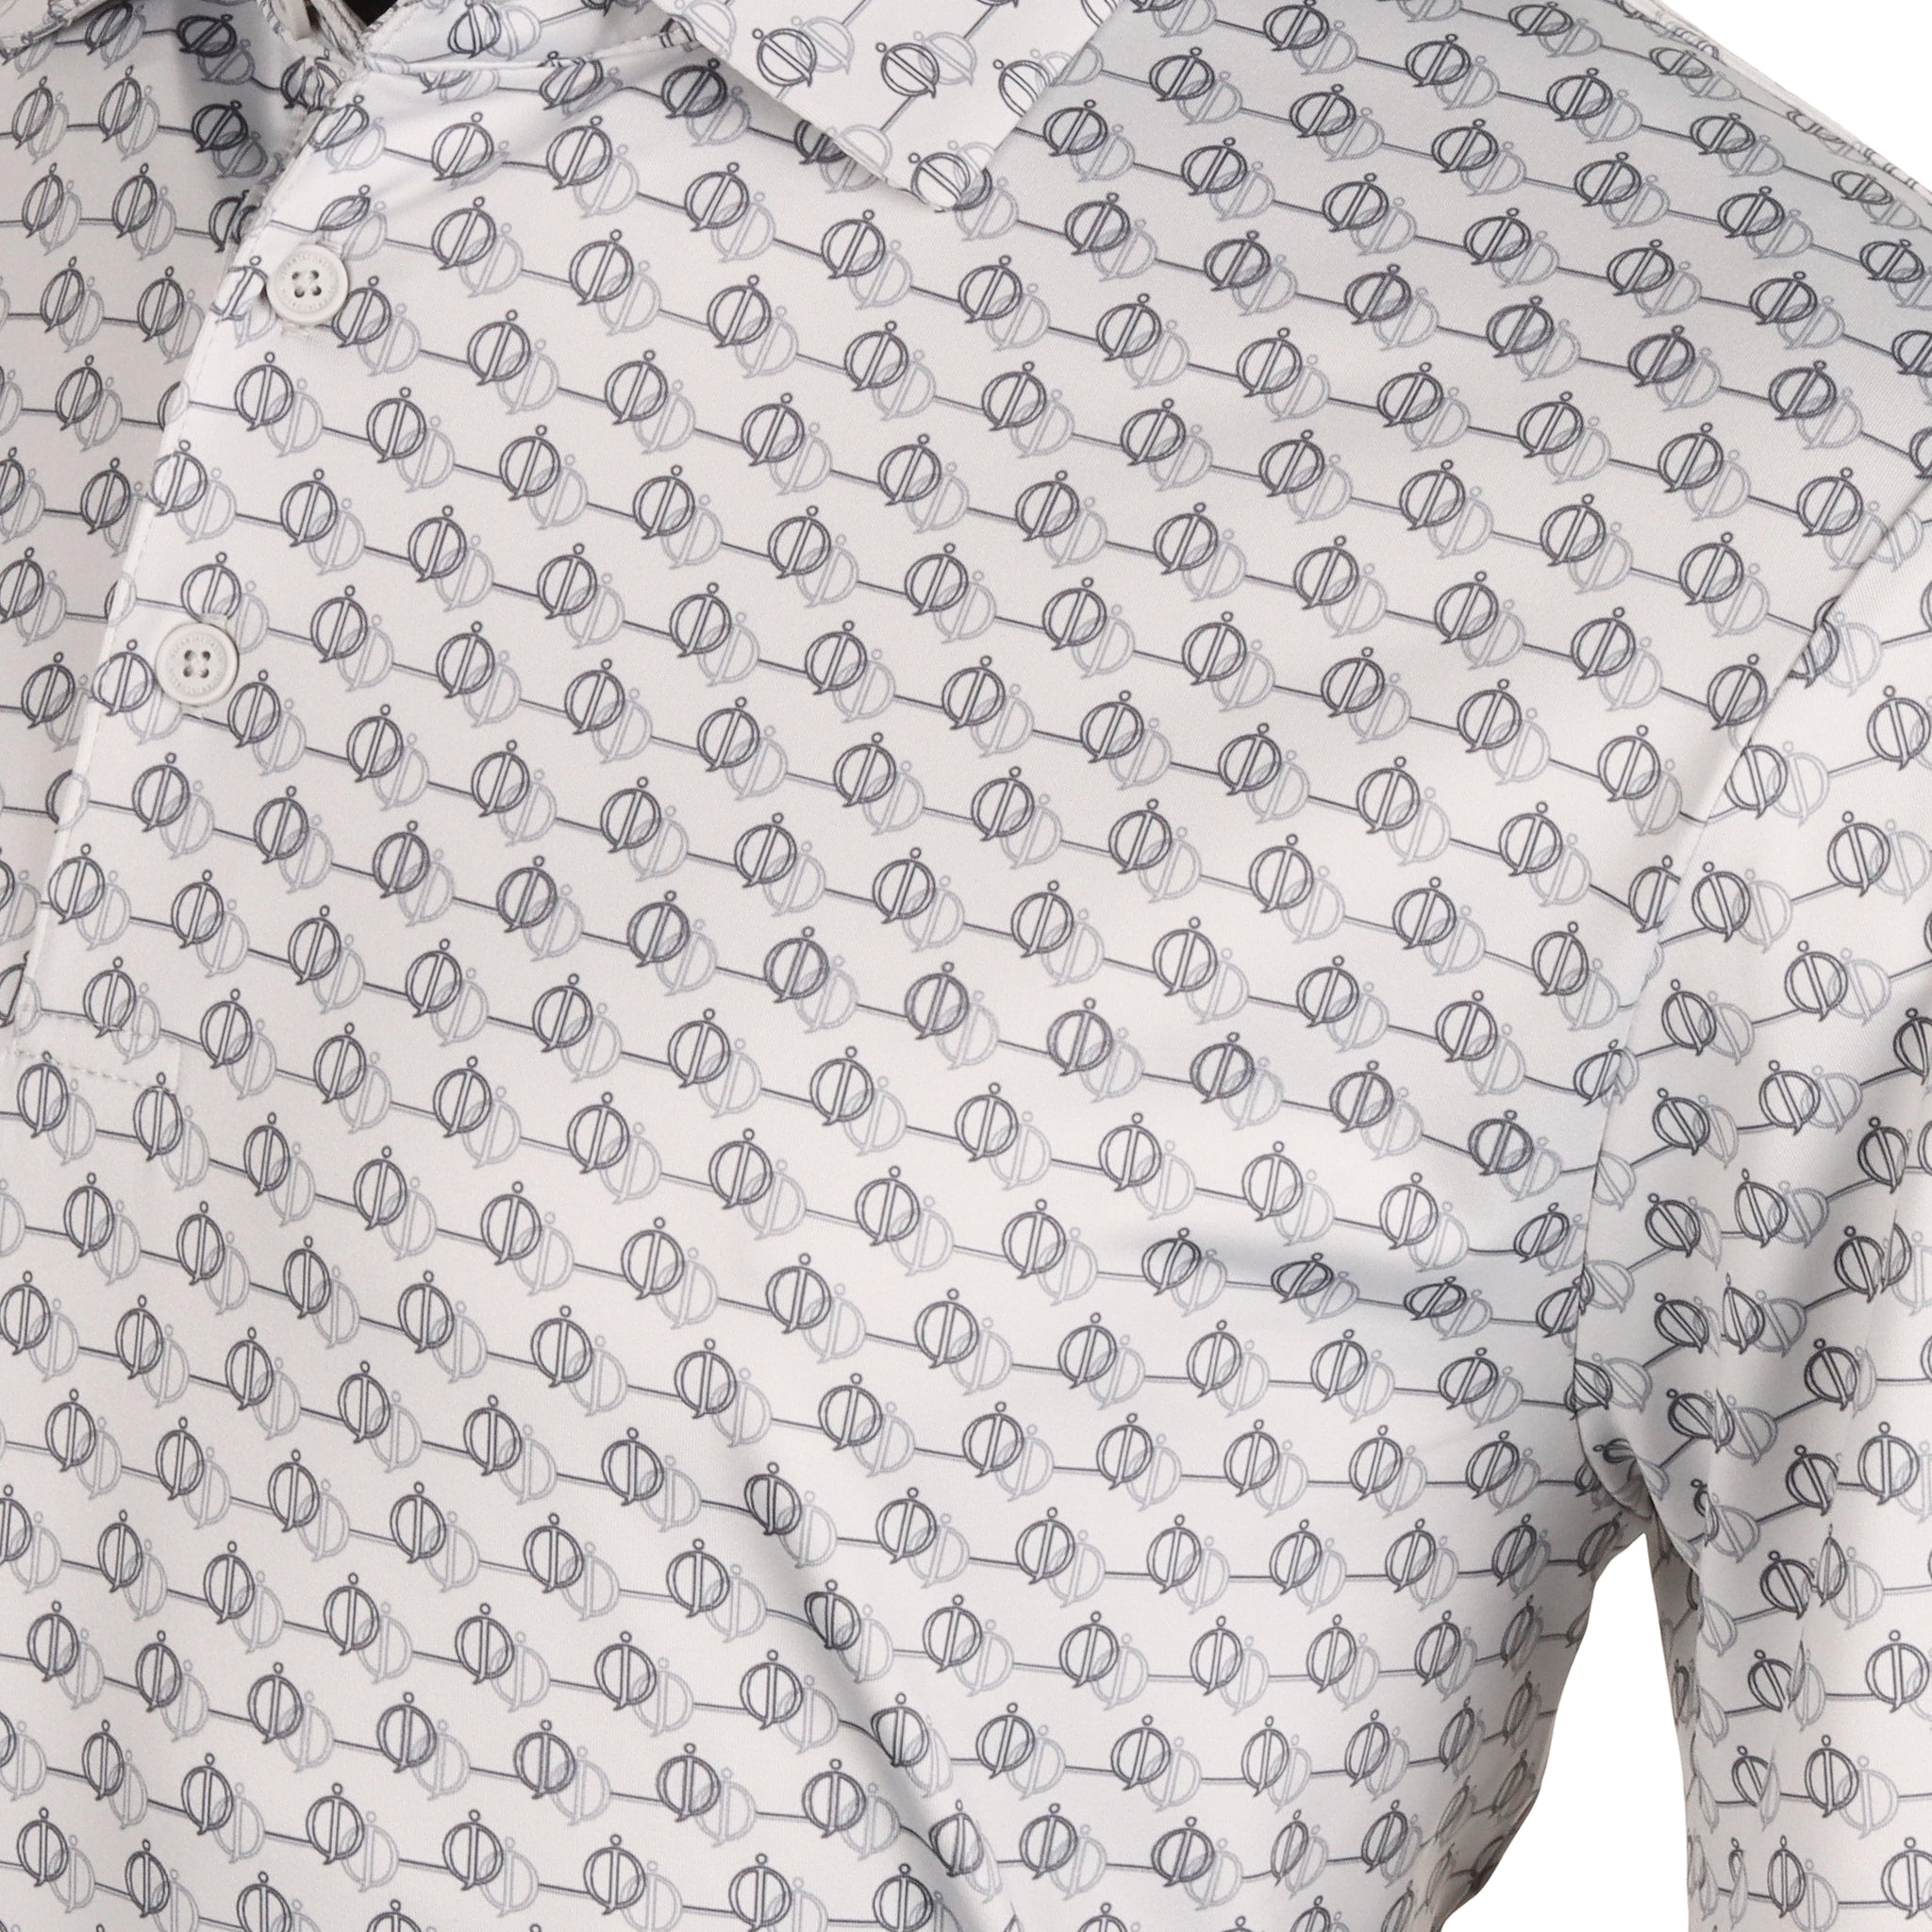 oscar-jacobson-kotewall-shirt-ojts0219-lunar-grey